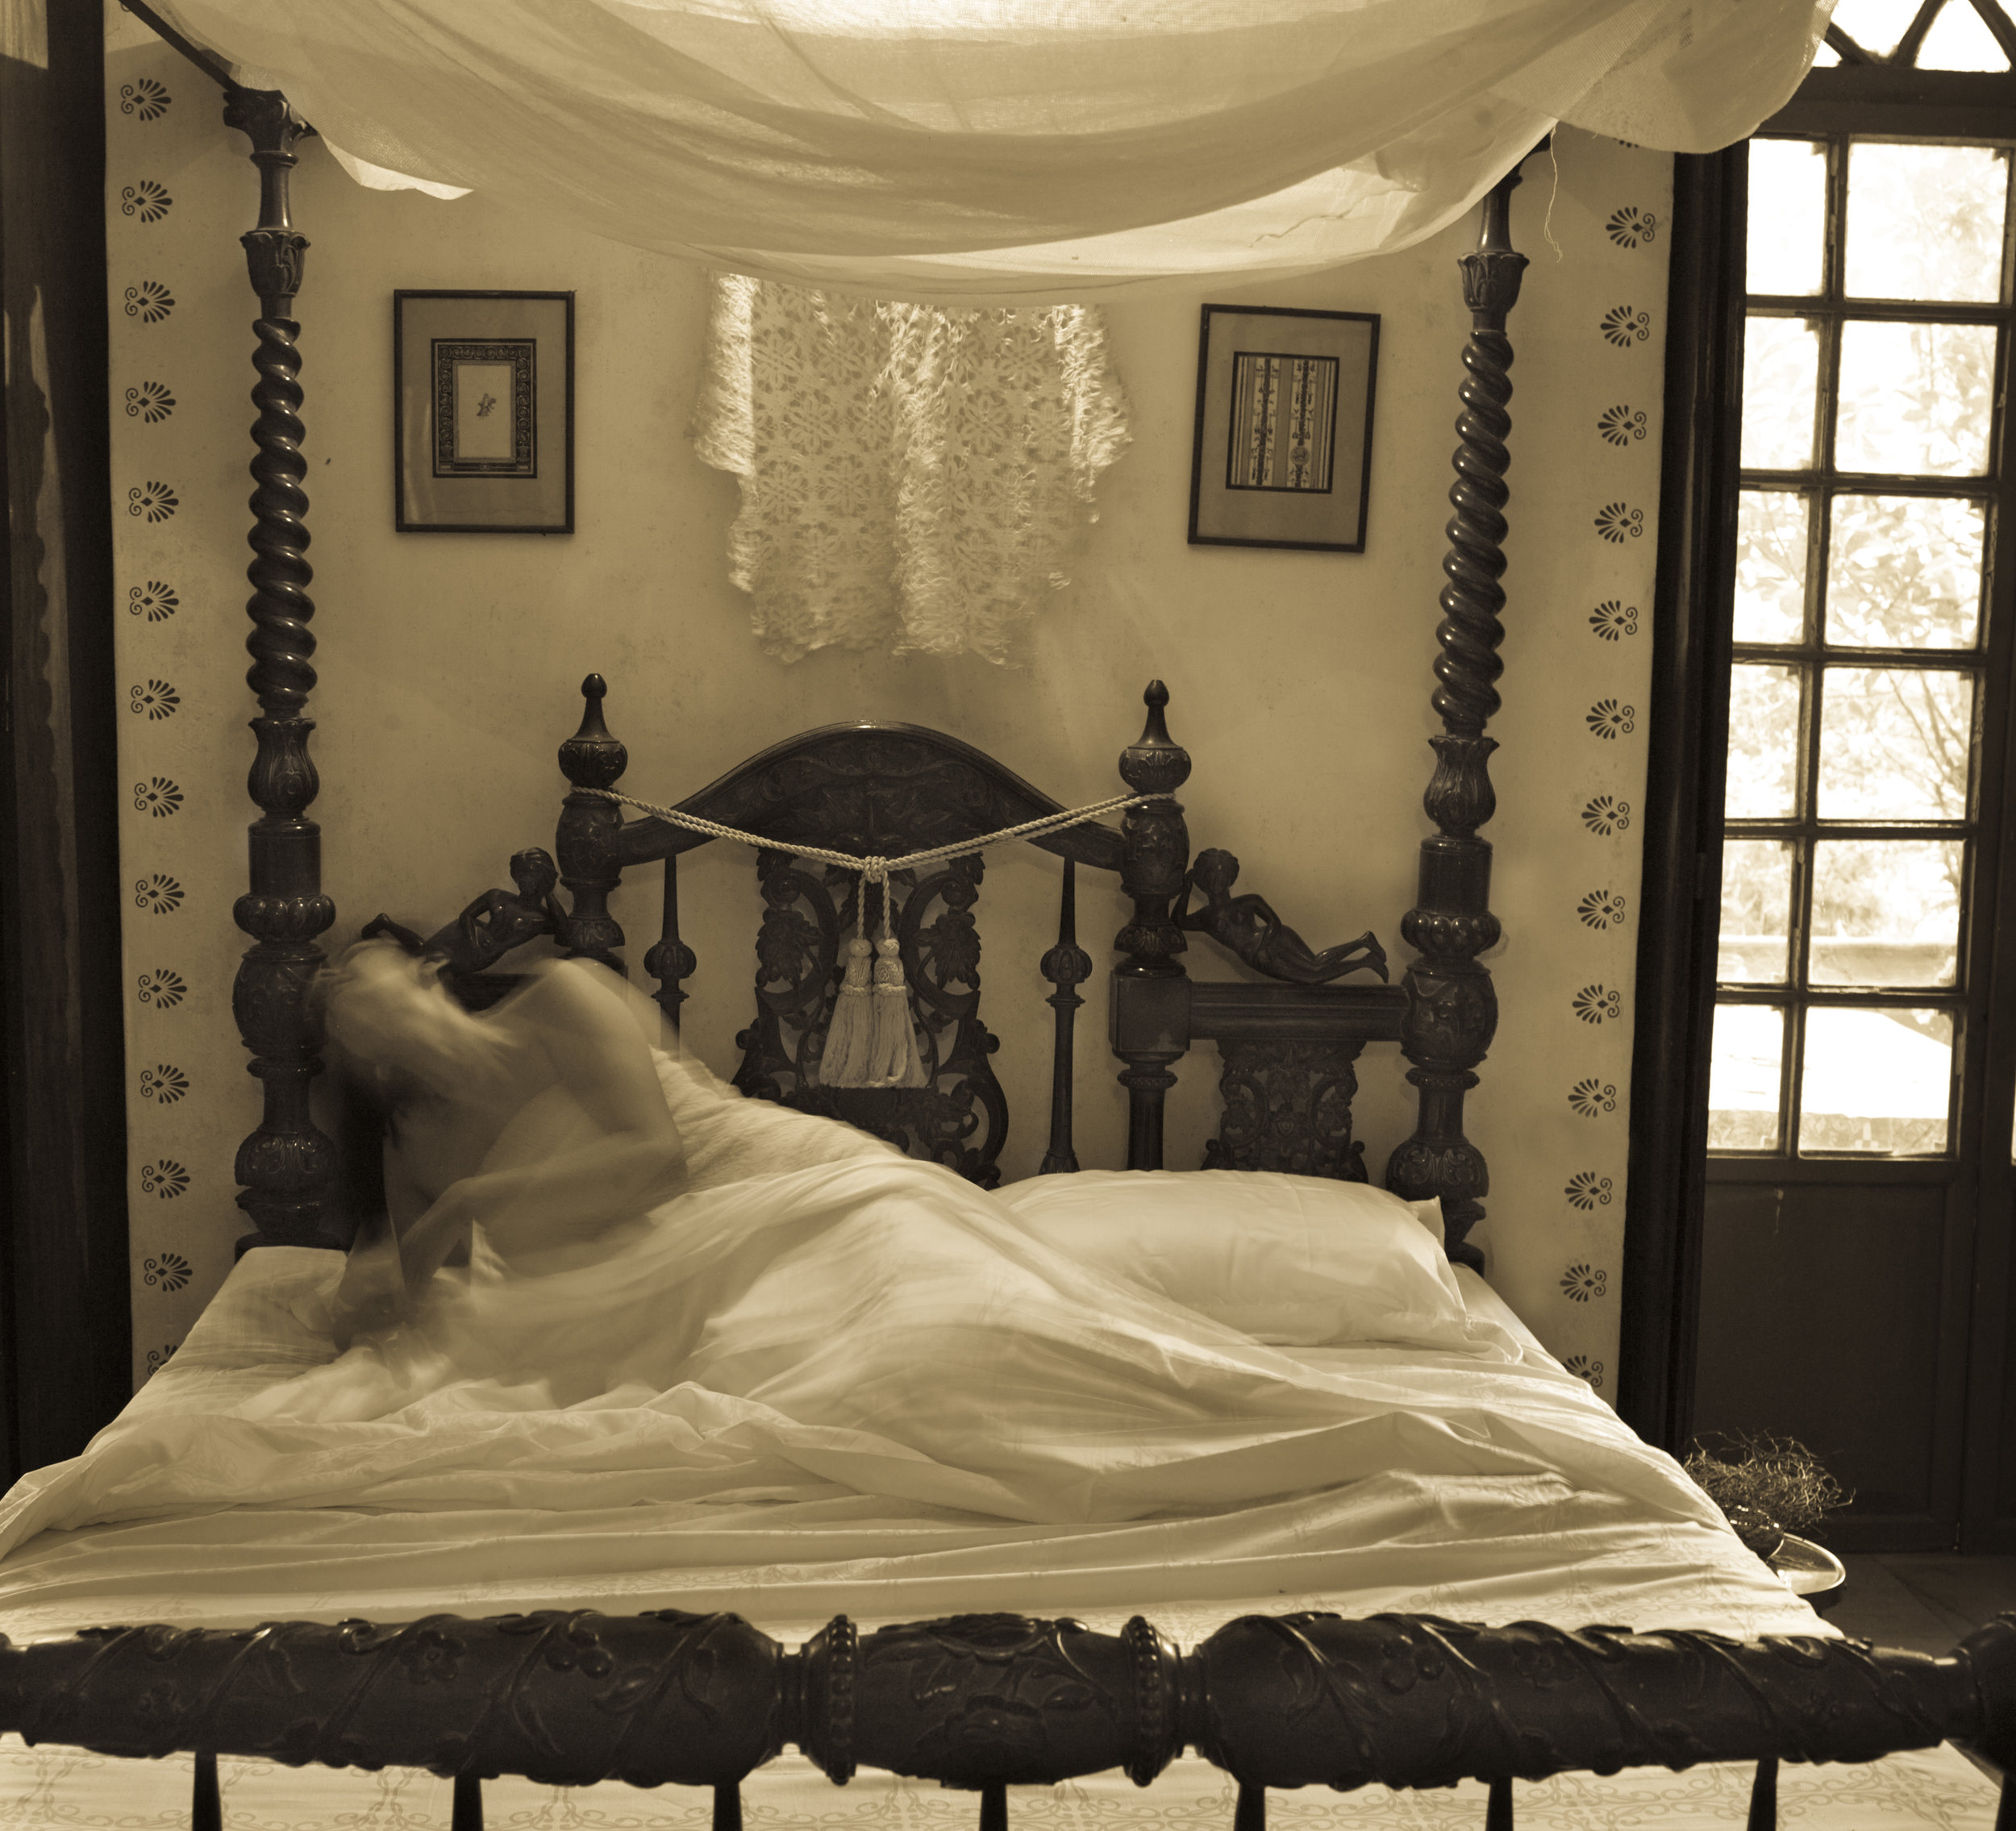  Pamela Sigh,&nbsp; The Lace Bed , 2012 